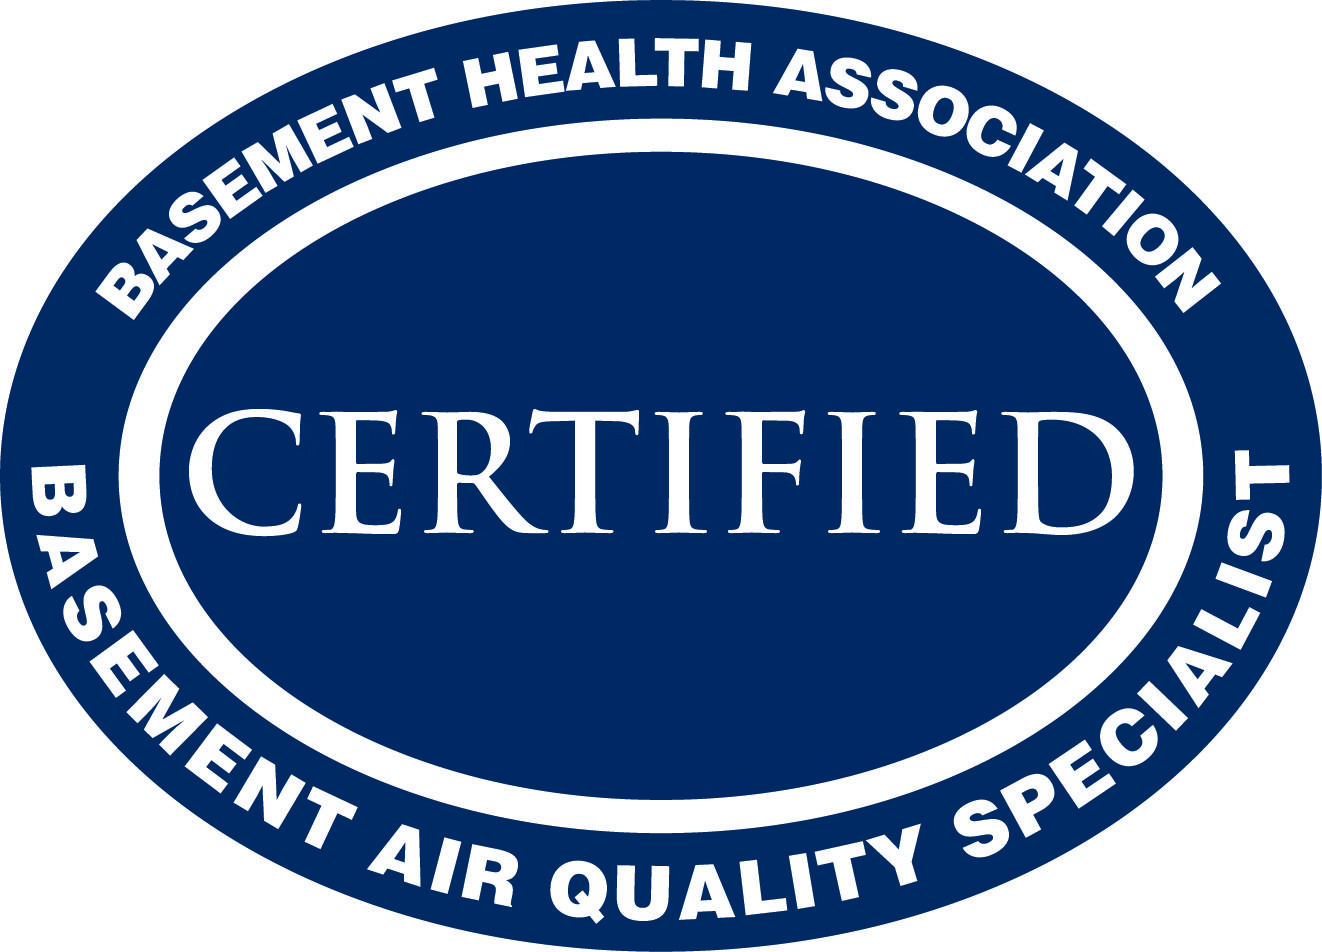 Air Quality bha certifiction logo